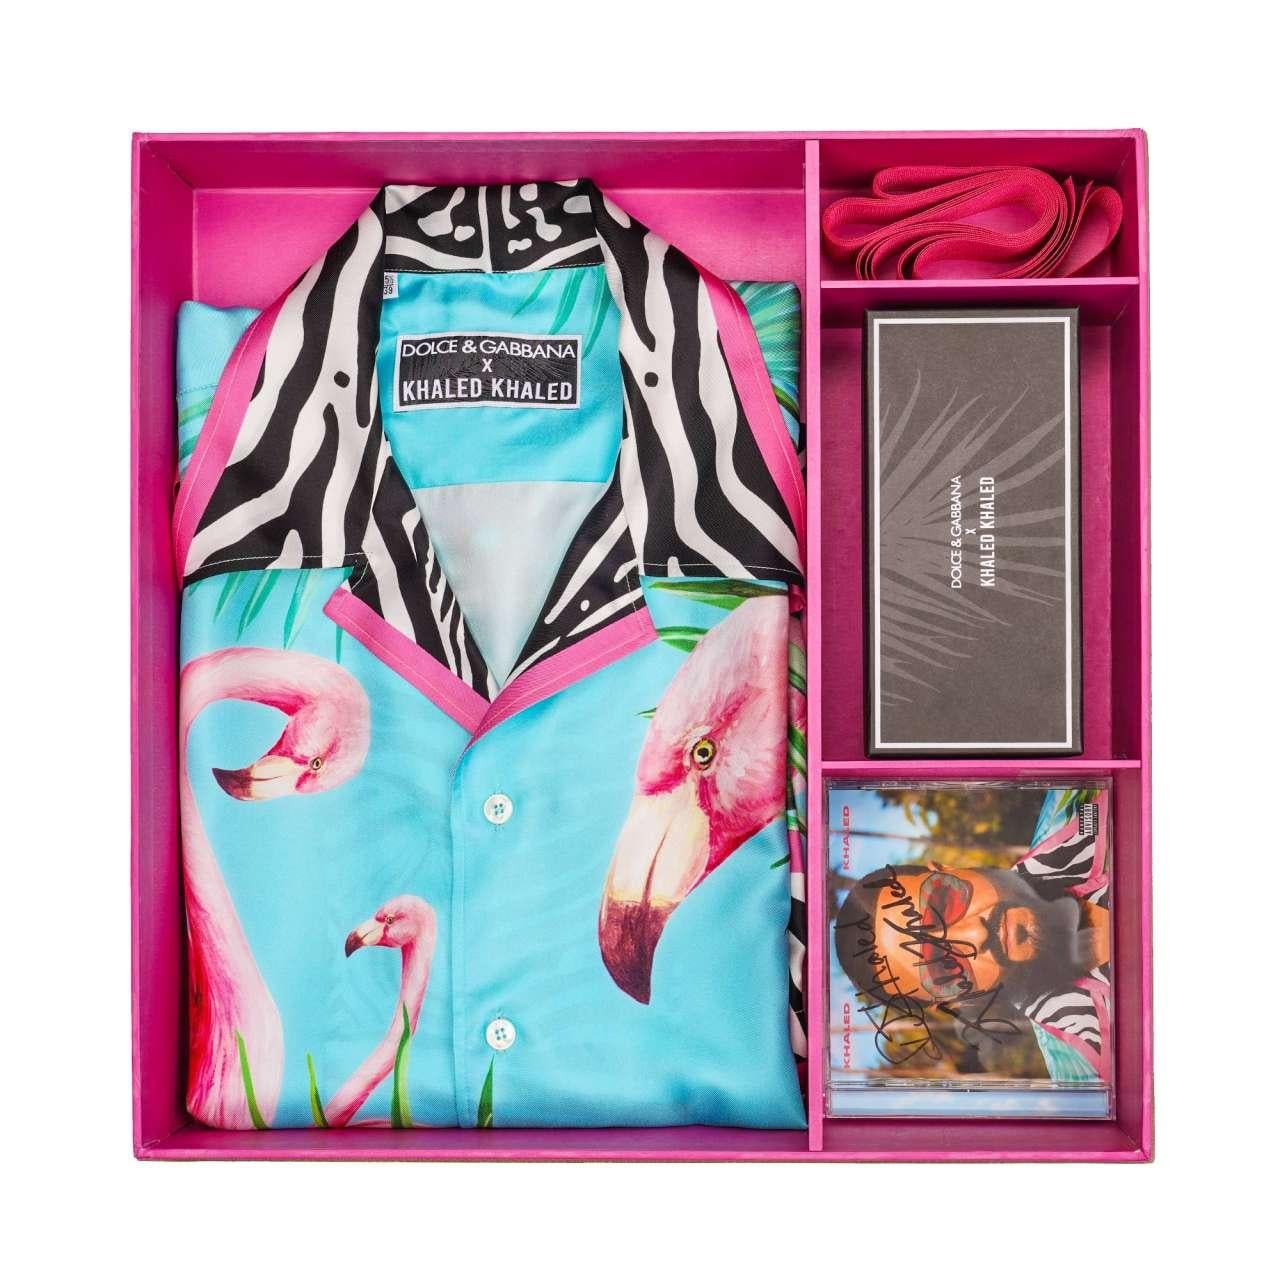 Dolce & Gabbana - DJ Khaled Silk Flamingo Zebra Shirt with Sunglasses and CD 37 For Sale 4